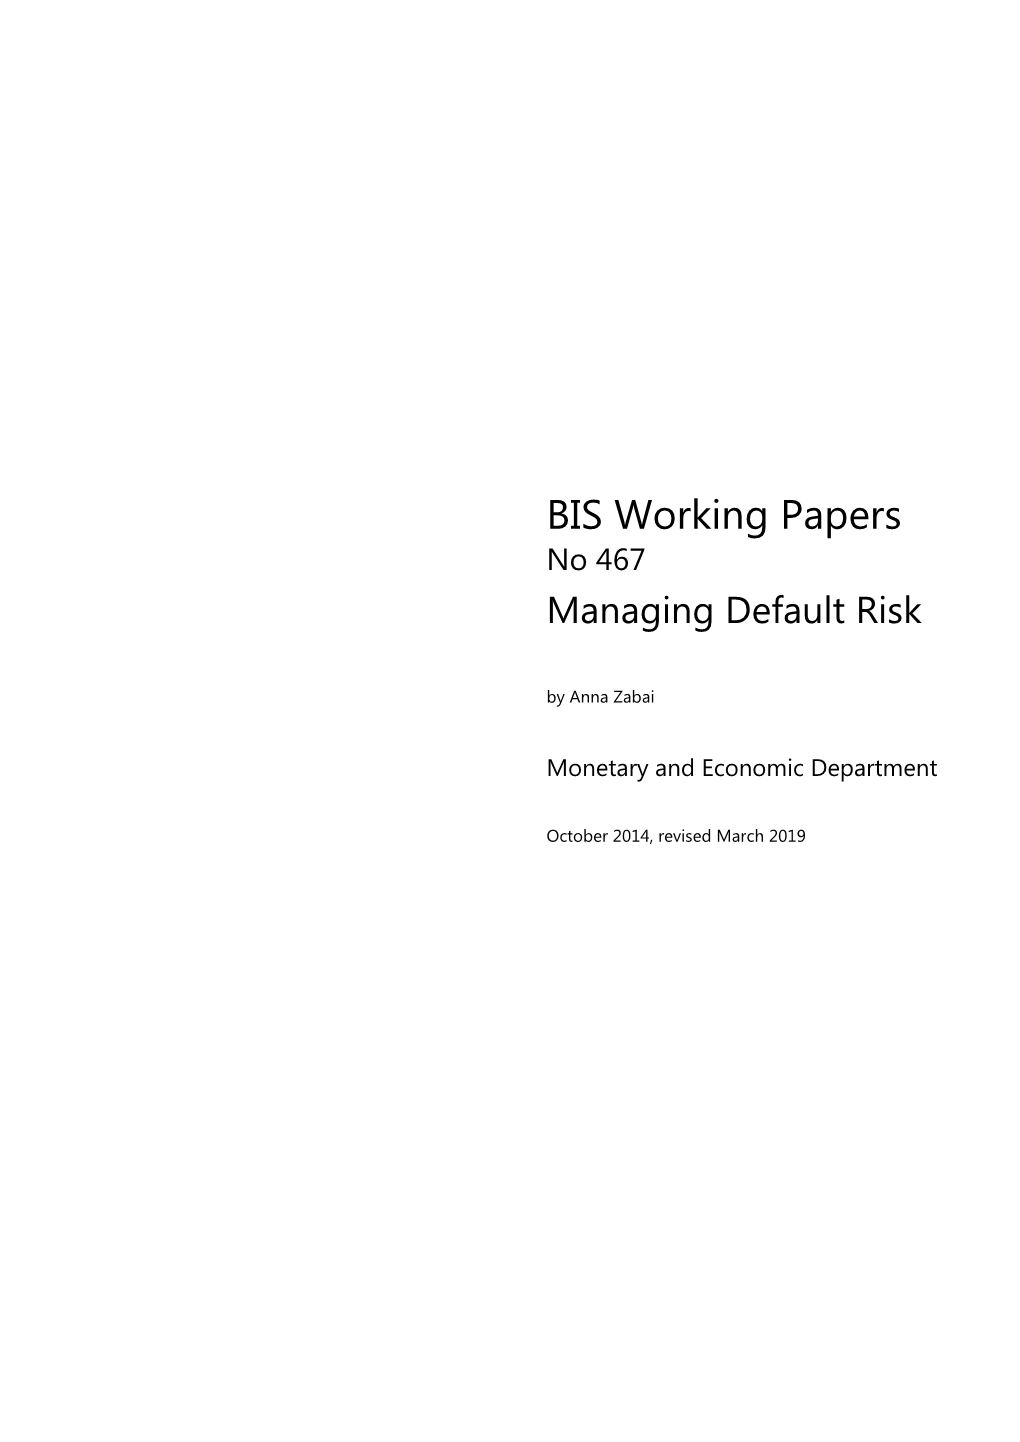 BIS Working Papers No 467 Managing Default Risk